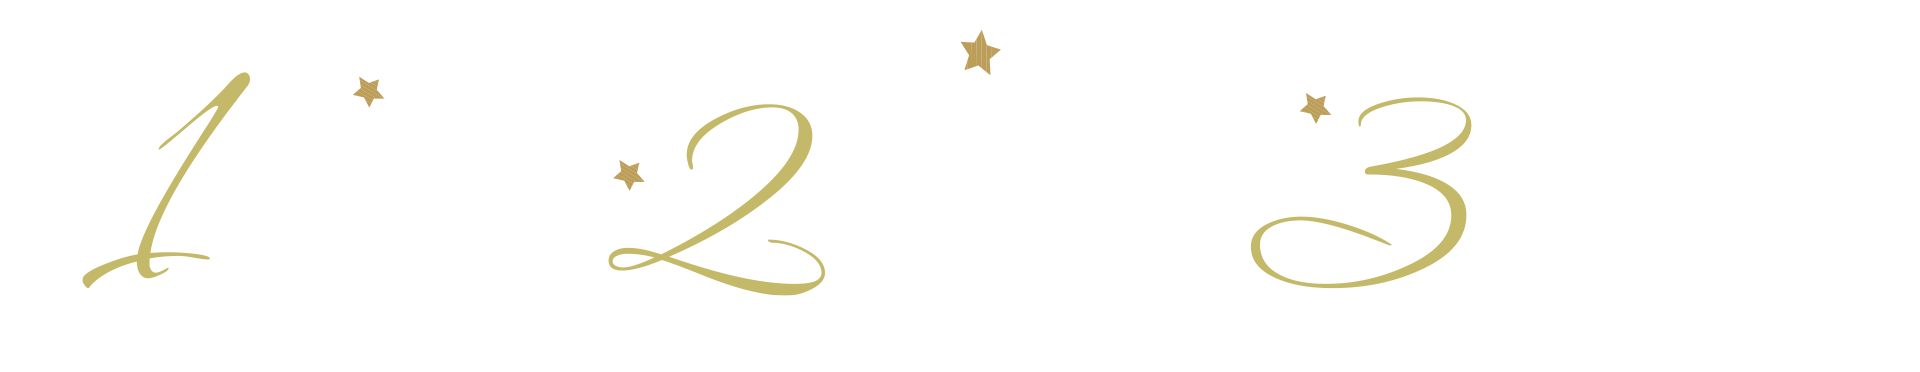 1 Night, 2 Nights & 3 Nights Special Offer